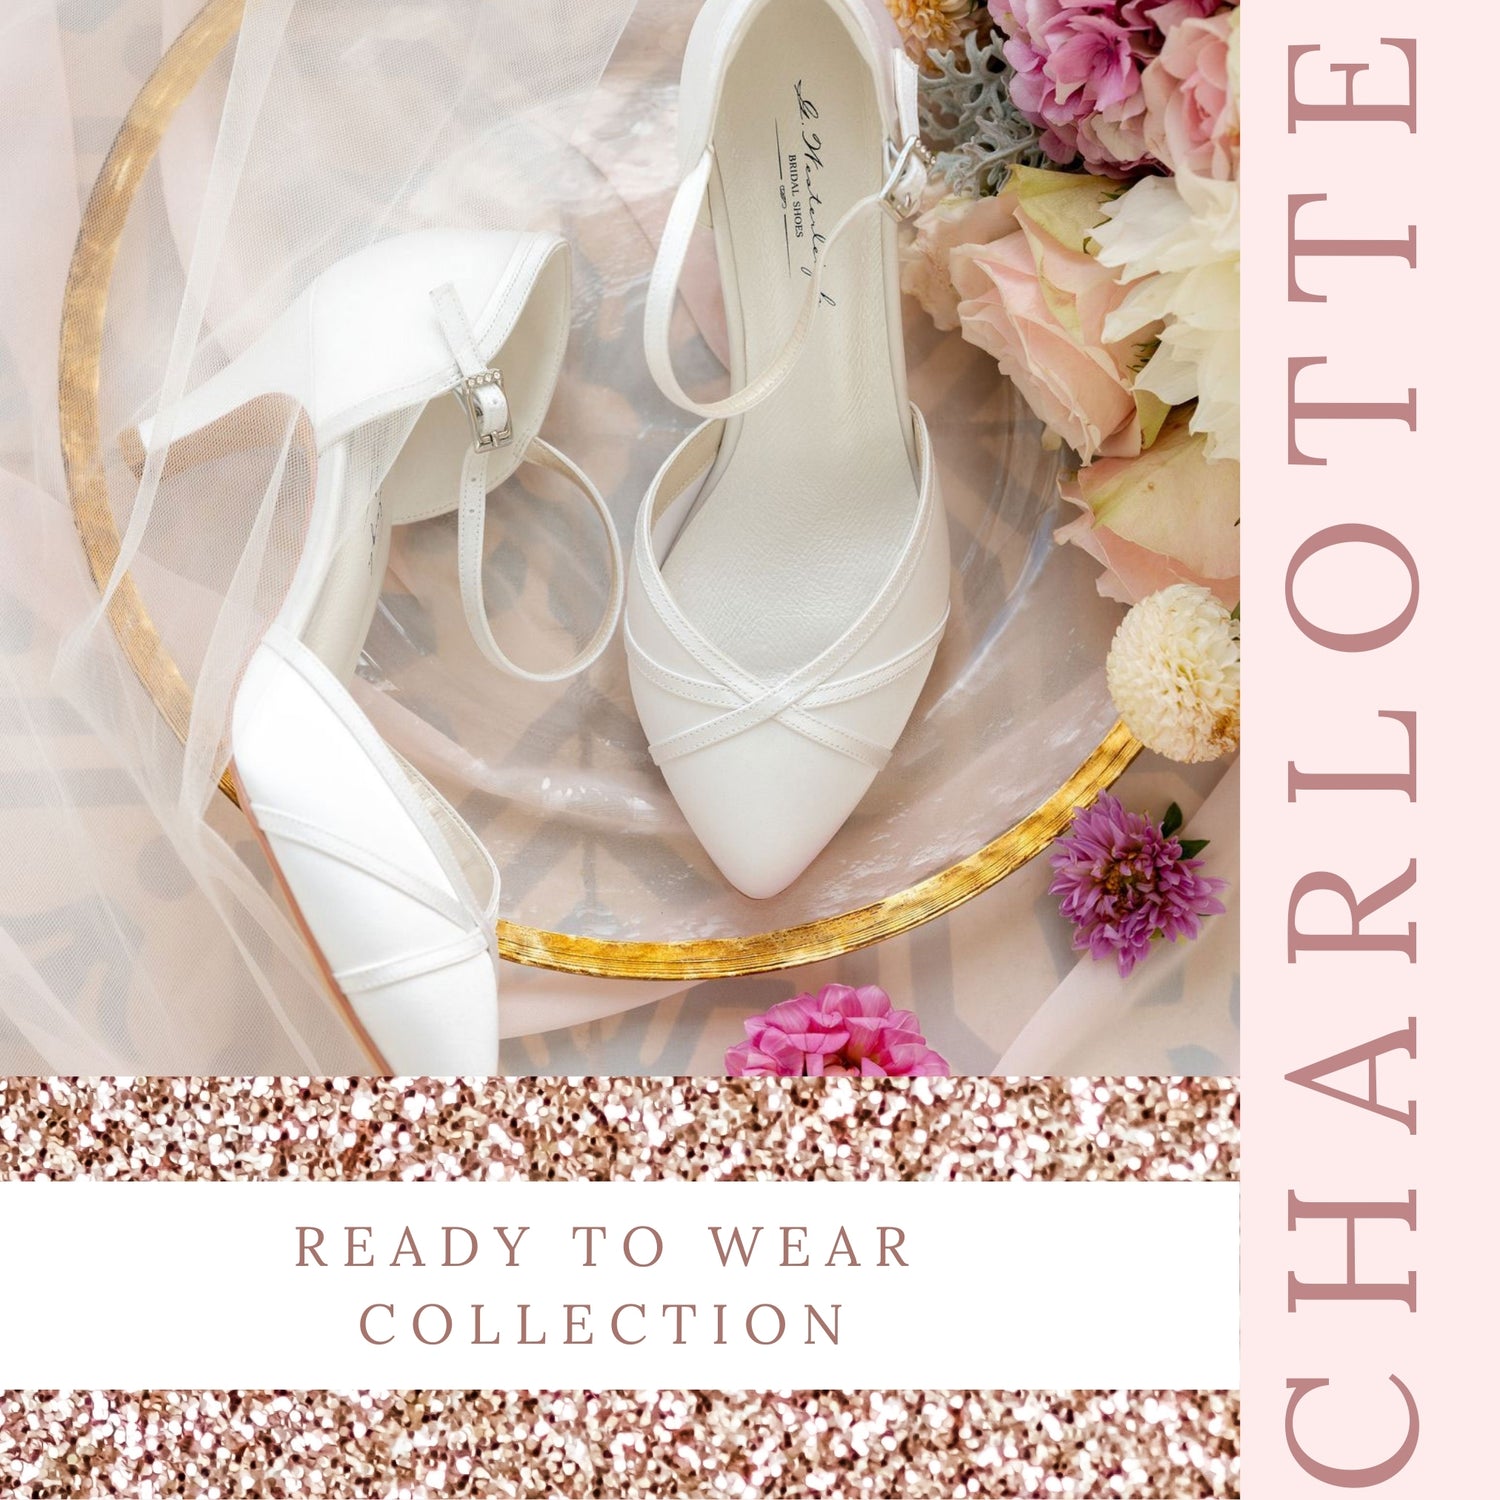 closed-toe-heels-wedding